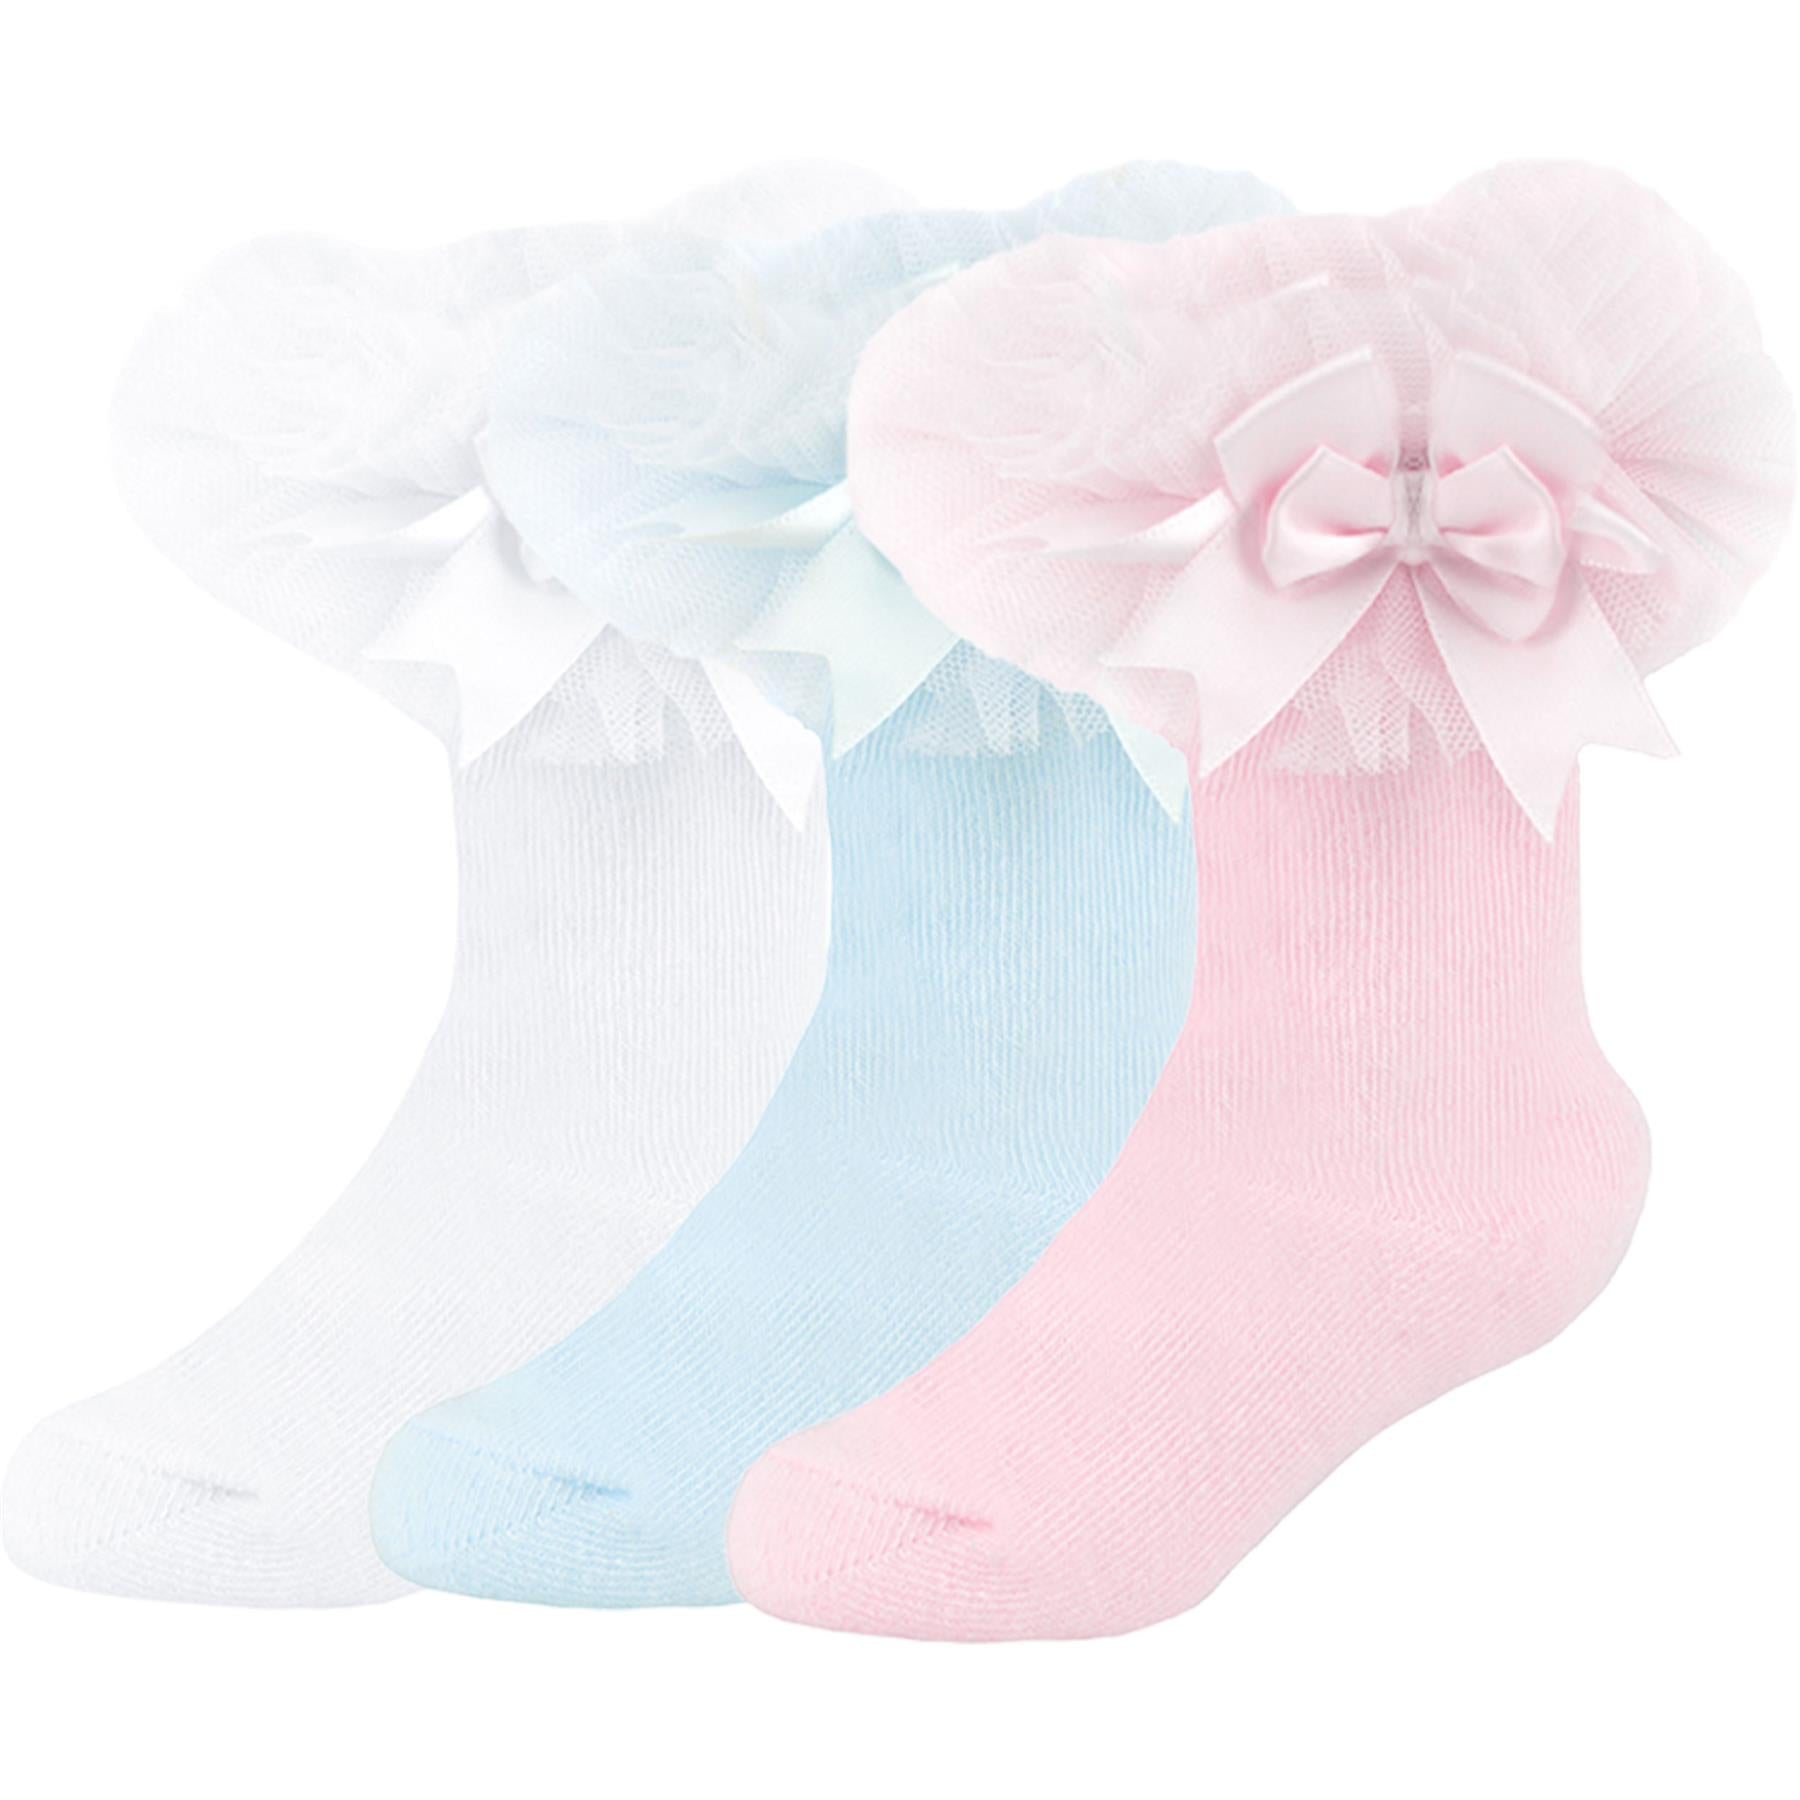 Infant Toddler Baby Girls Tutu Socks with Bow Frilly Cotton Newborn Socks